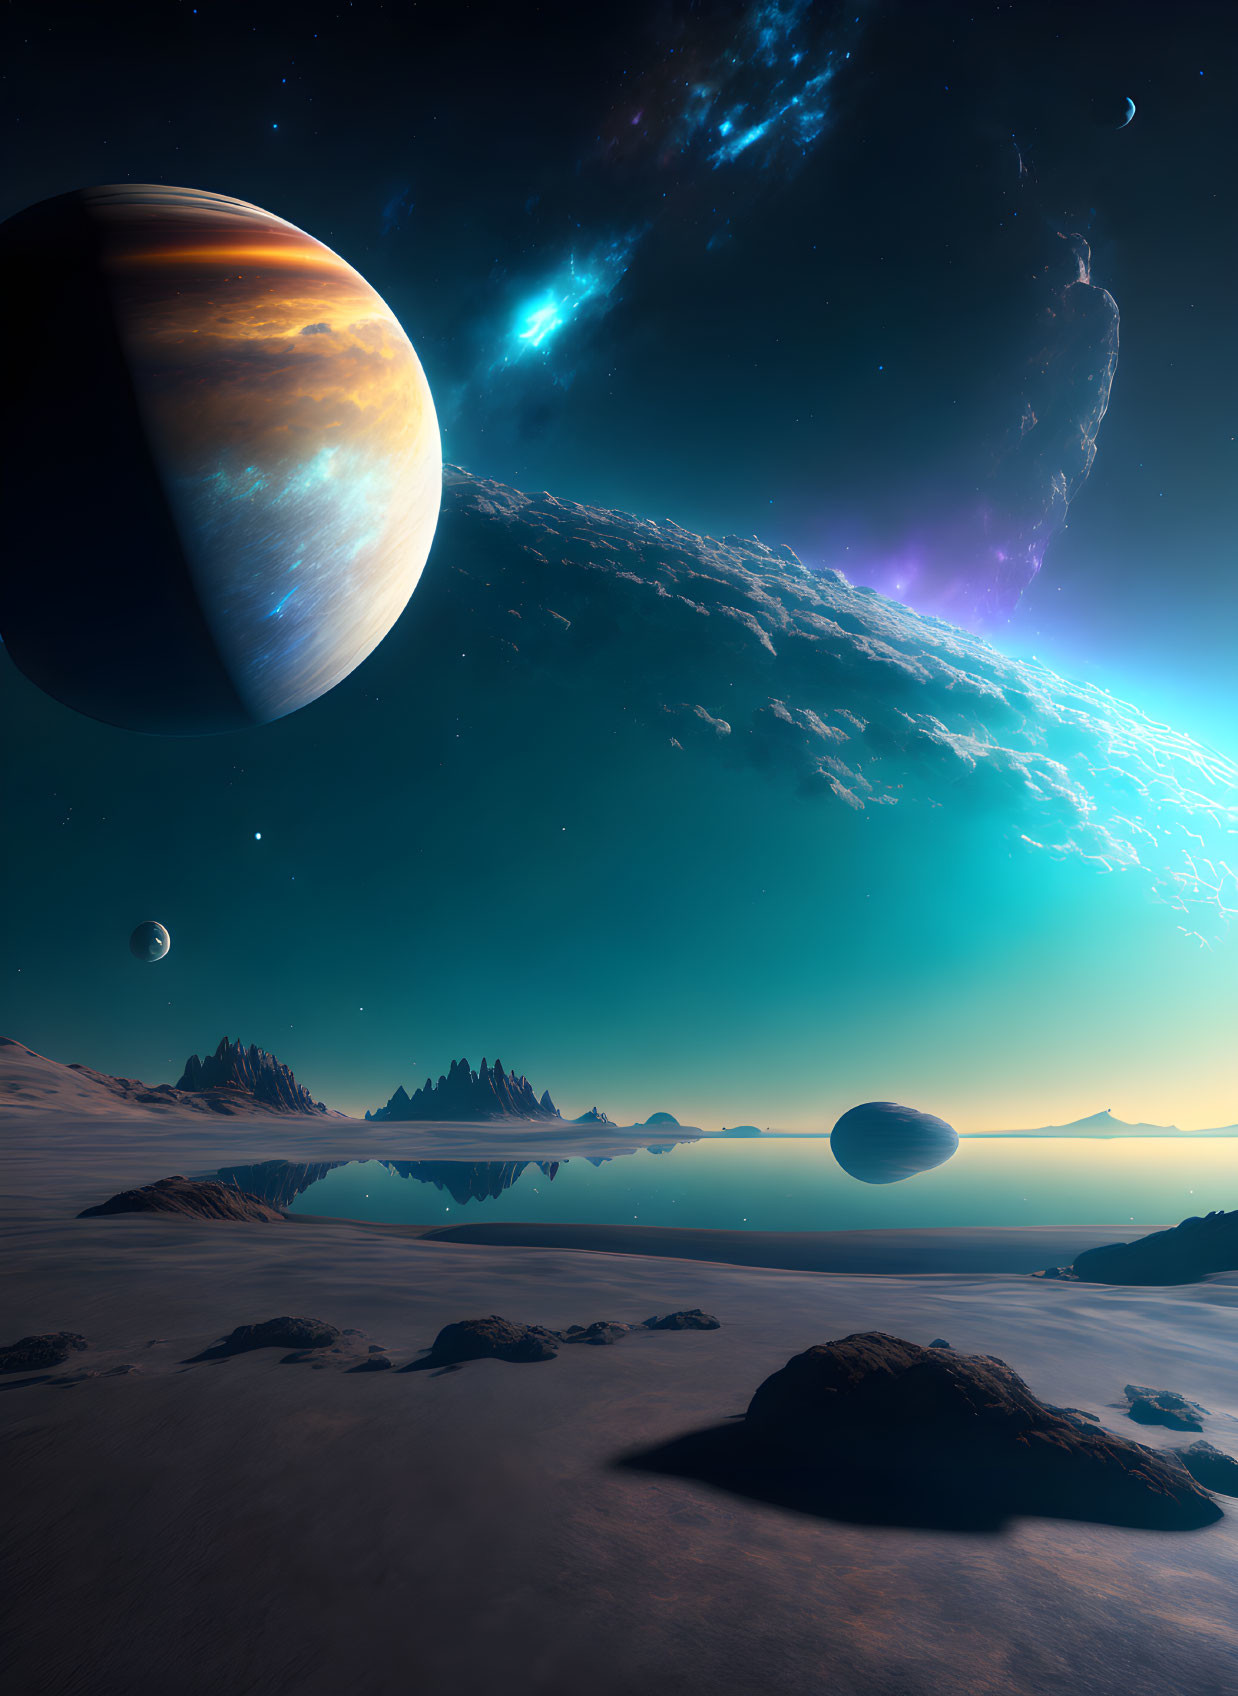 Alien desert landscape with planet, moons, stars, and nebula.